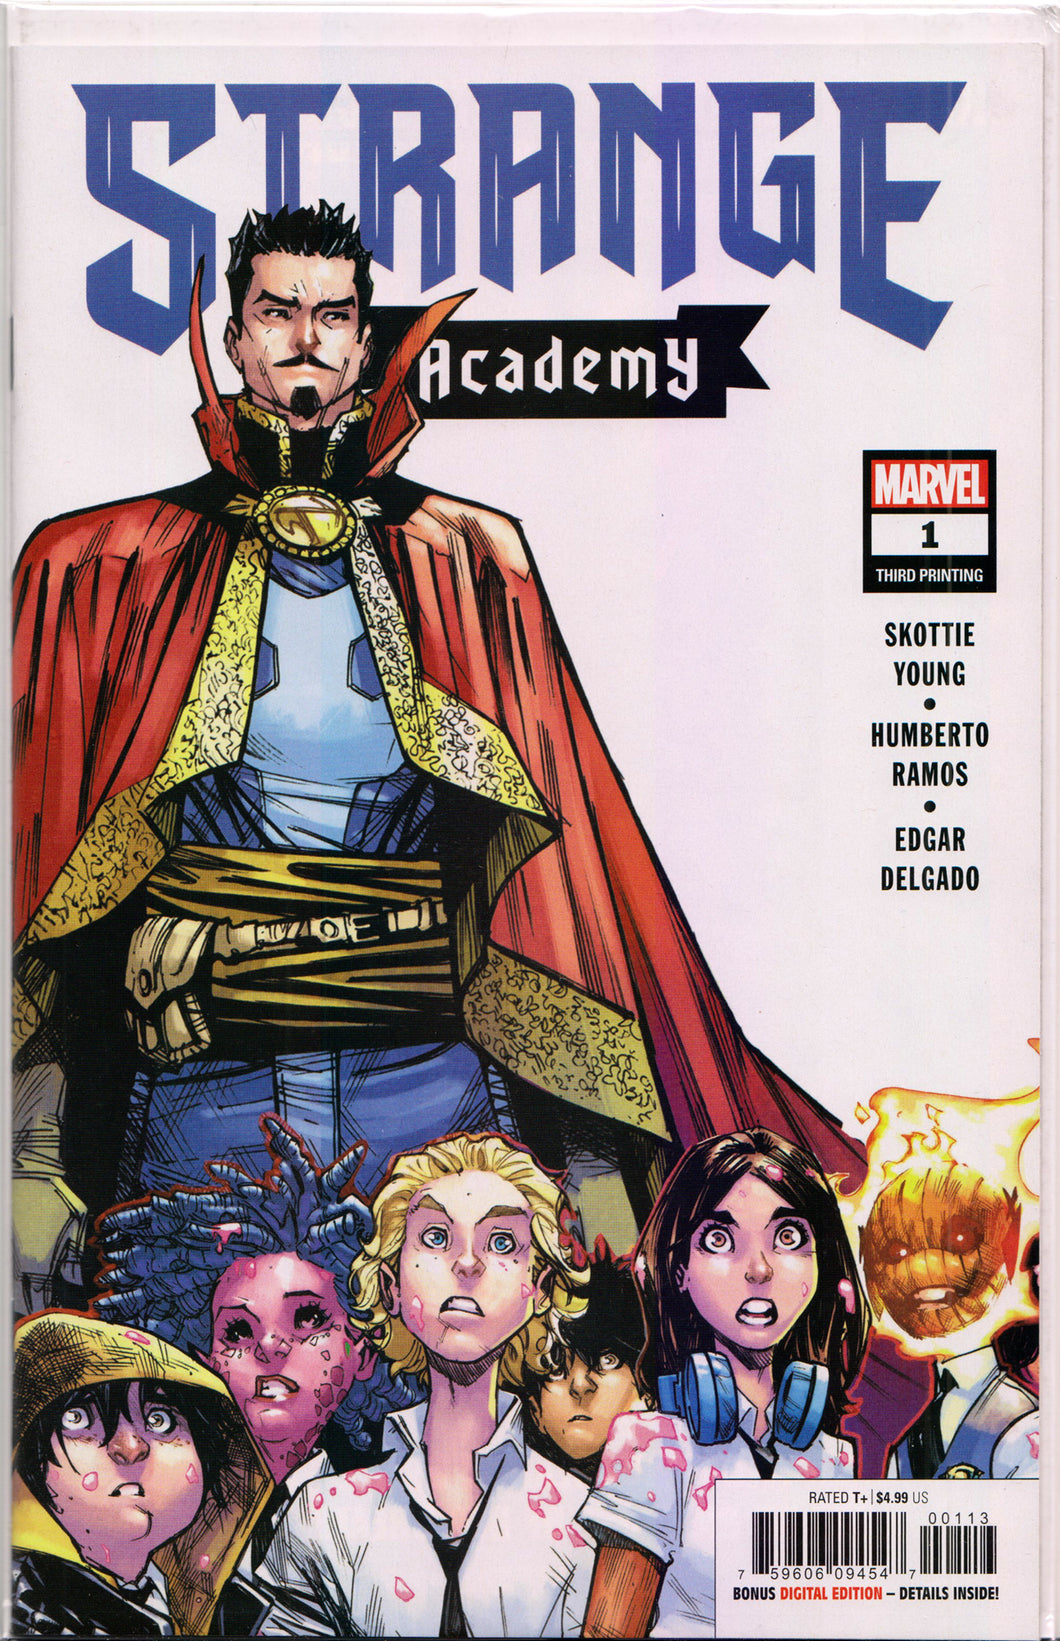 STRANGE ACADEMY #1 (3RD PRINT VARIANT) COMIC BOOK ~ Marvel Comics